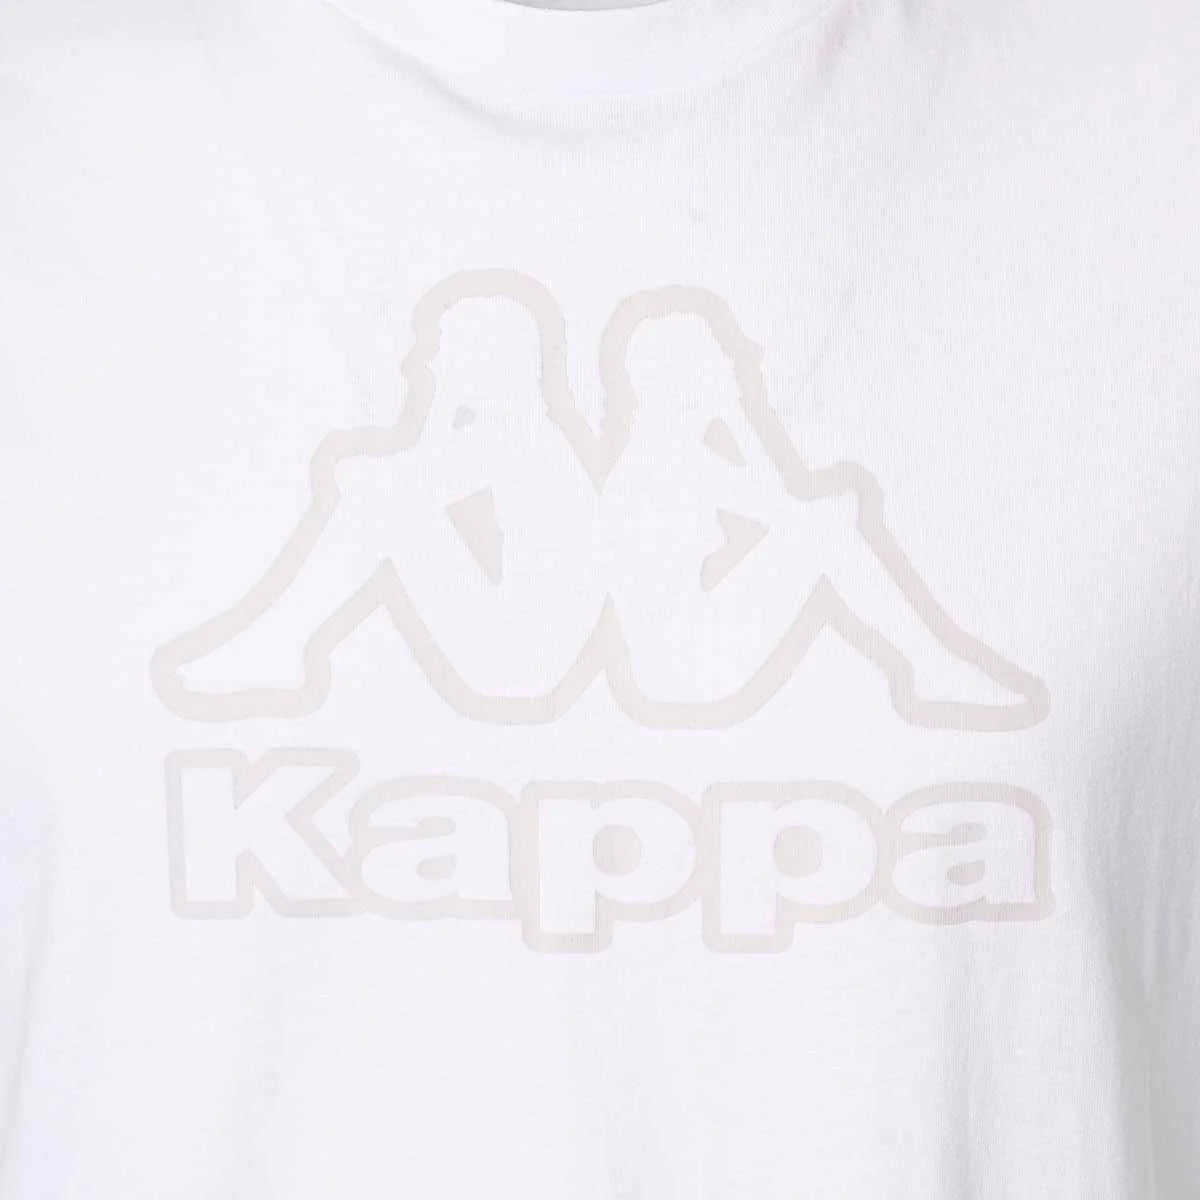 Camiseta Kappa Cremy - Ropa Ideal Para El Gim O Entrenar  MKP